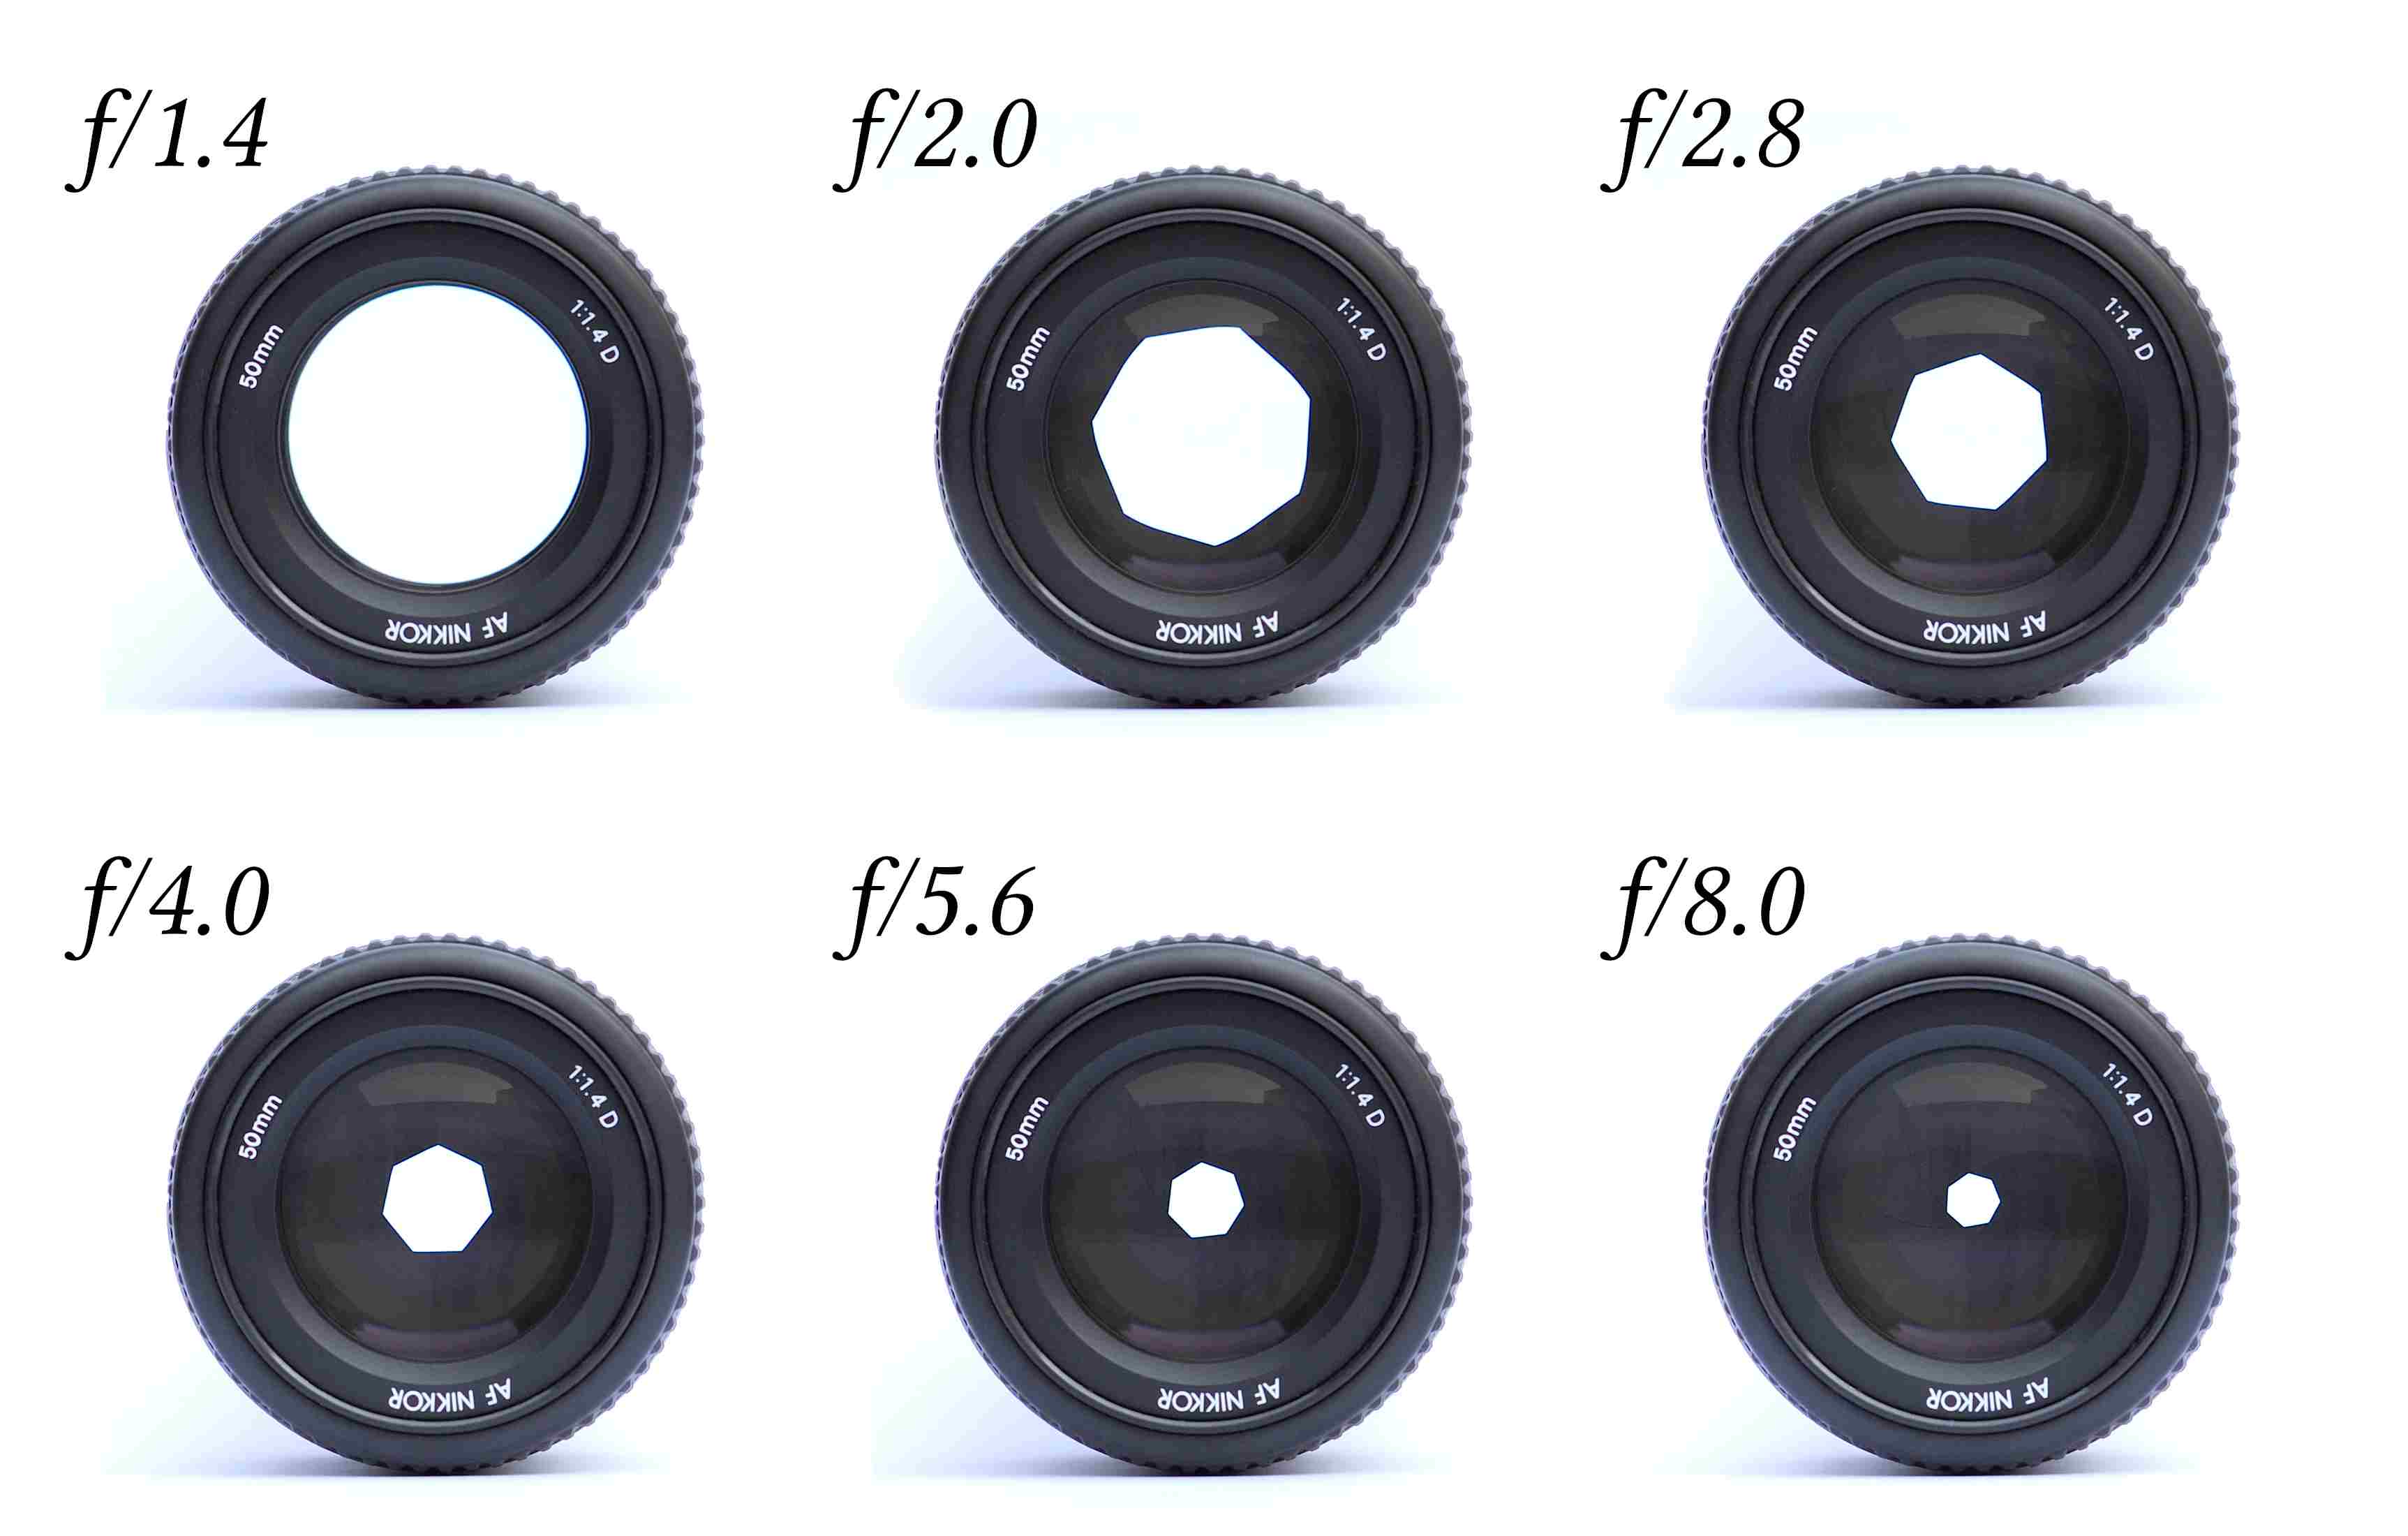 Objektivy fotoaparátu s různými velikostmi clony a čísly clonového čísla